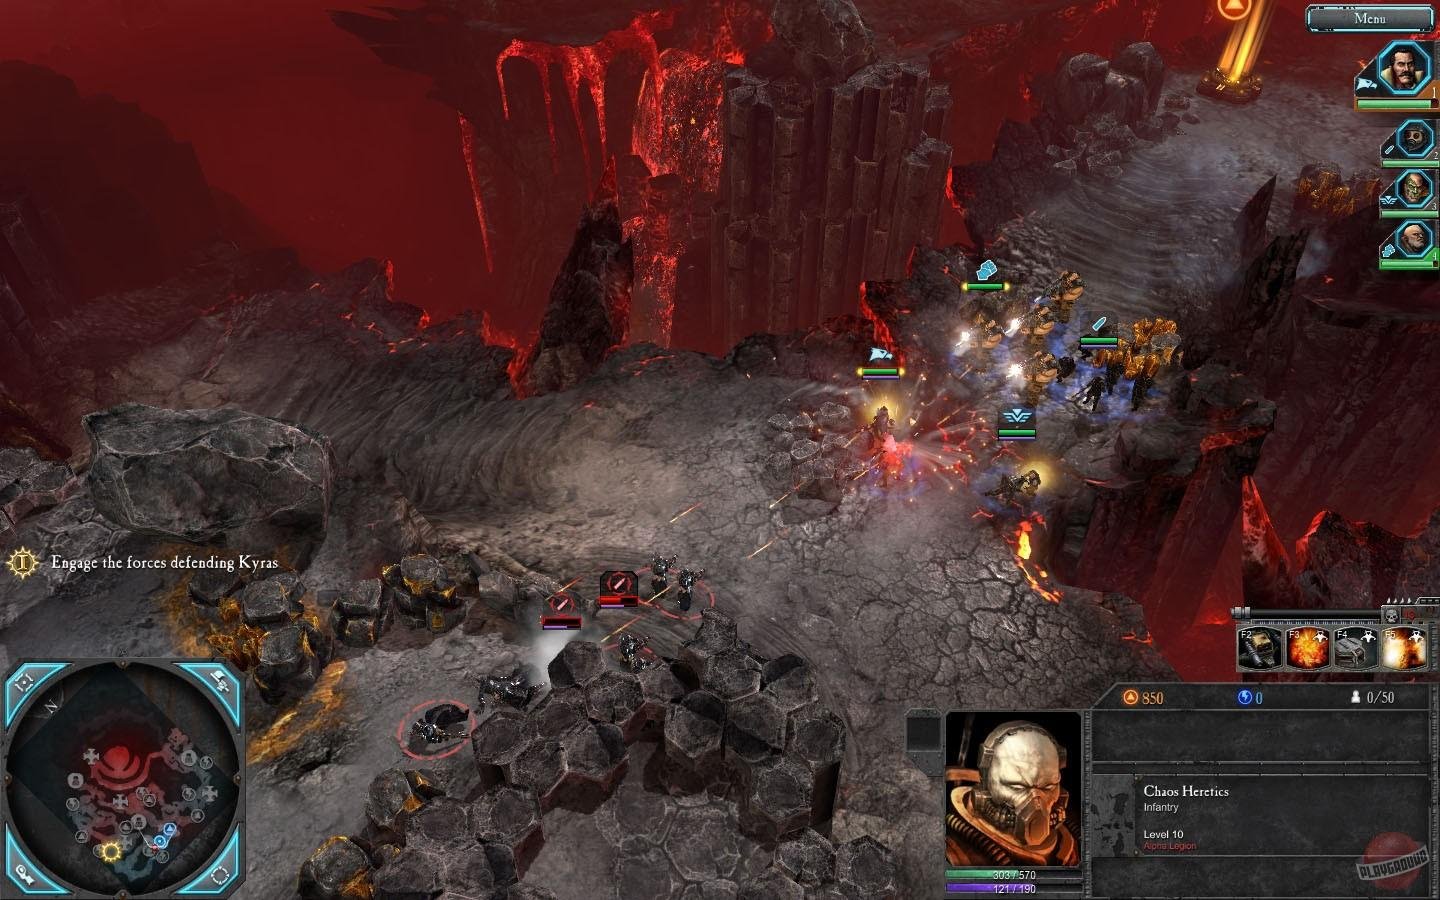 Warhammer 40.000: Dawn of War 2 - Chaos Rising